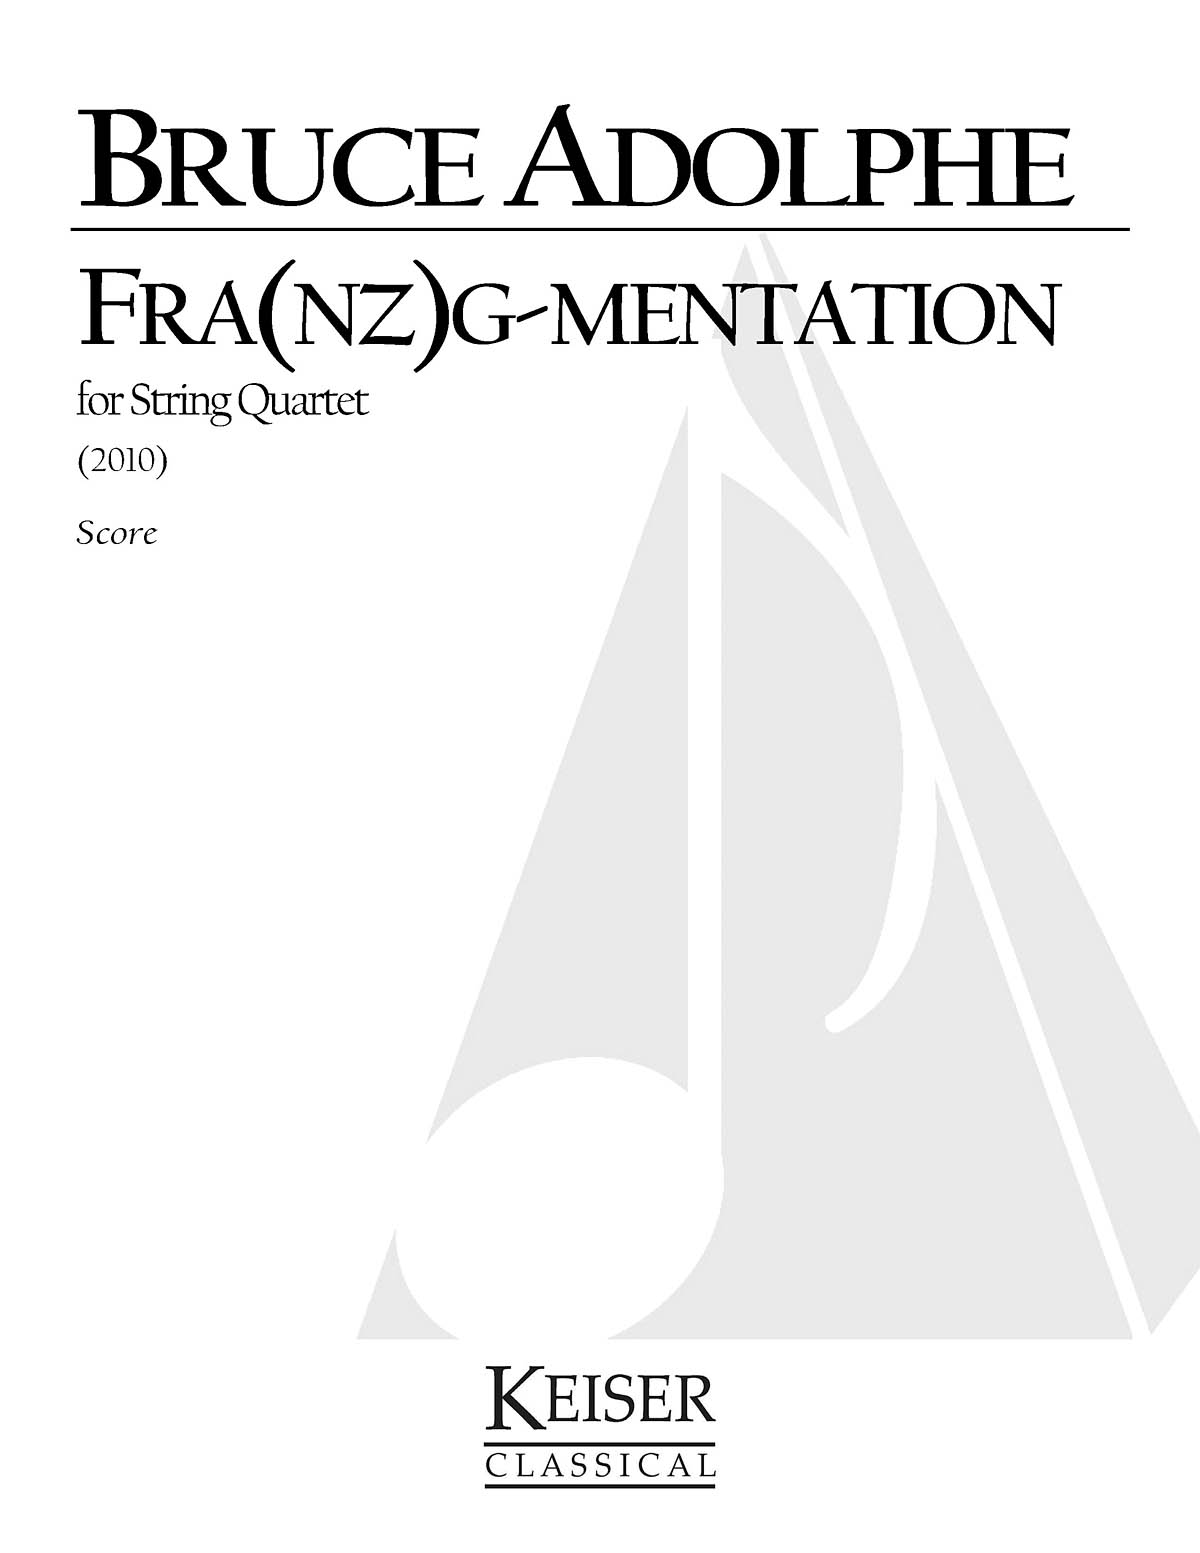 Franzg-mentation